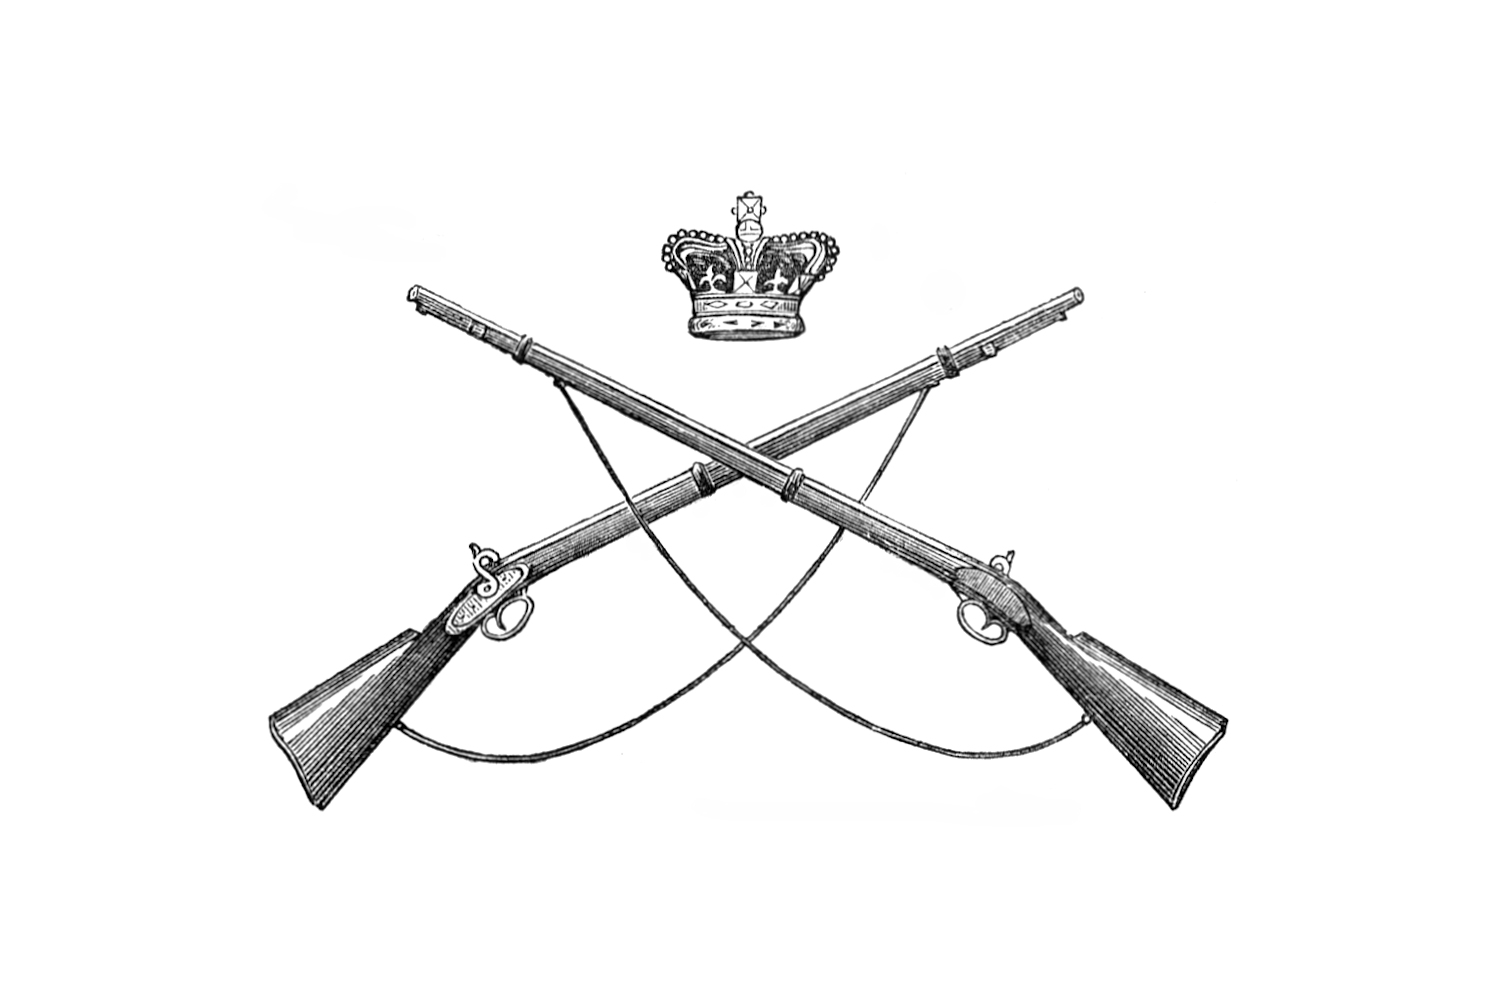 British Musketry Manuals, 1859-1920